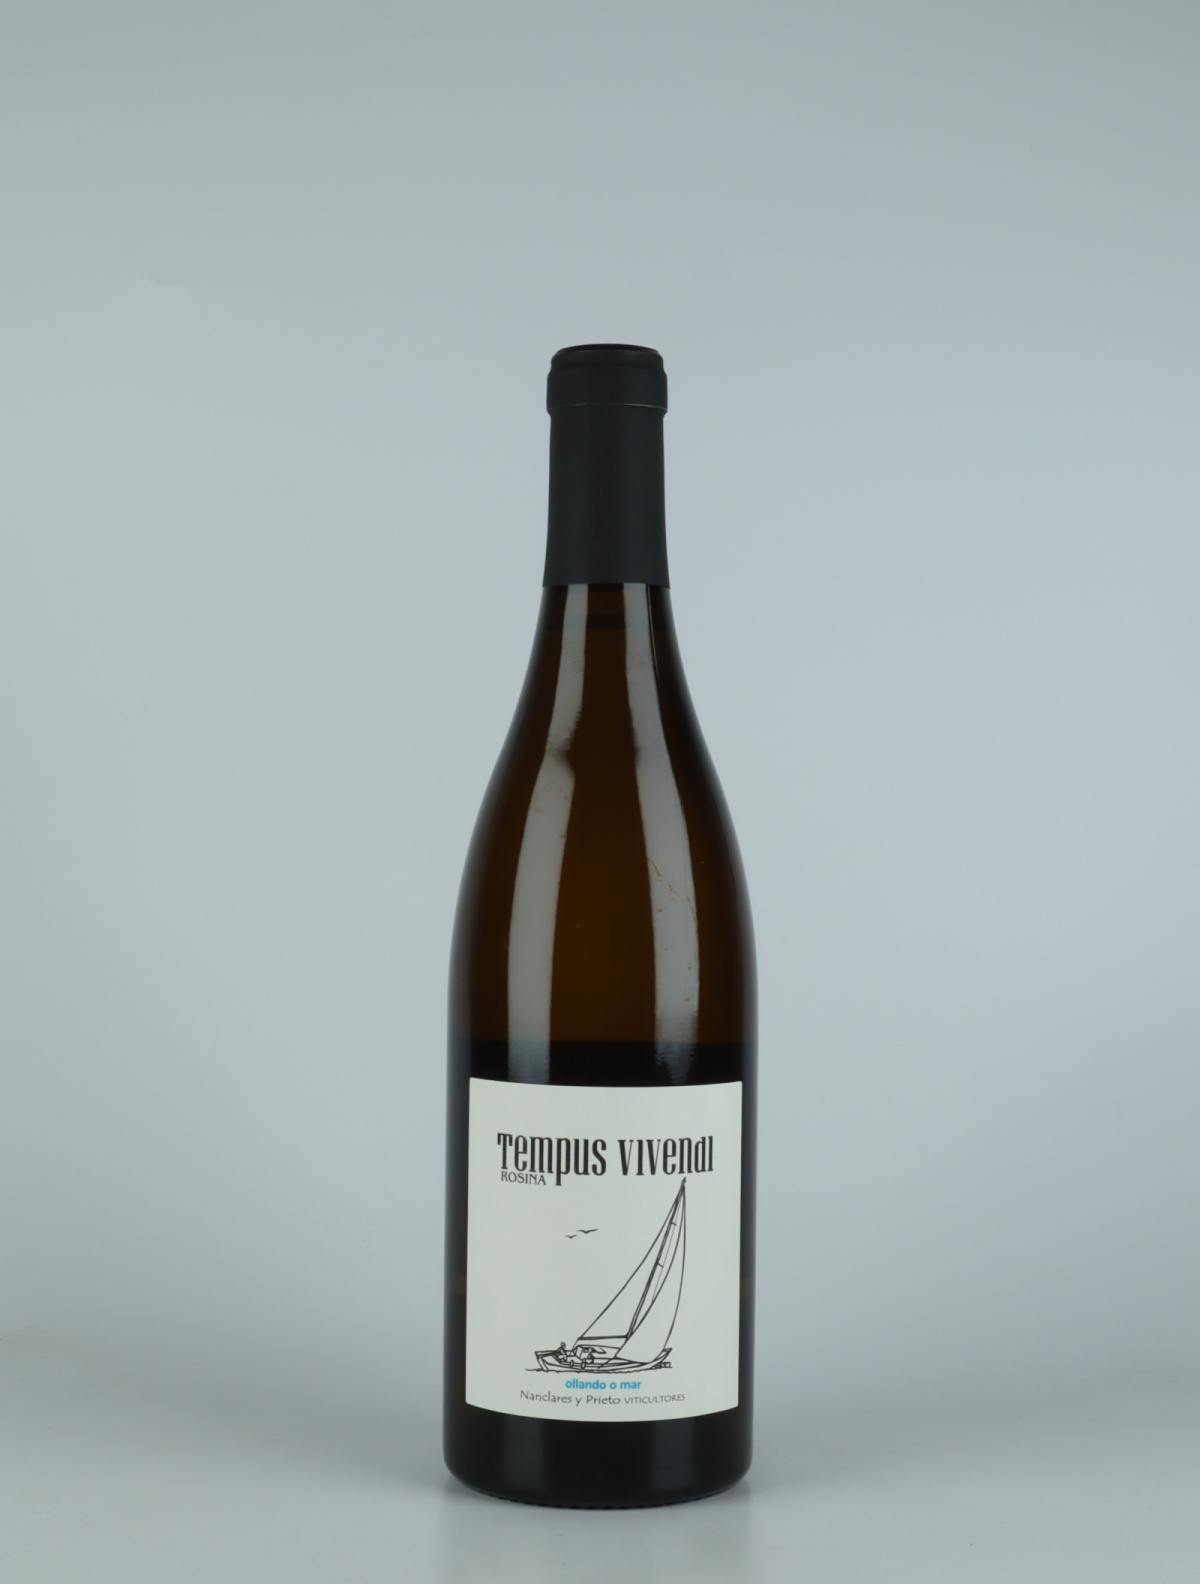 A bottle 2021 Tempus Vivendi White wine from Alberto Nanclares, Rias Baixas in Spain